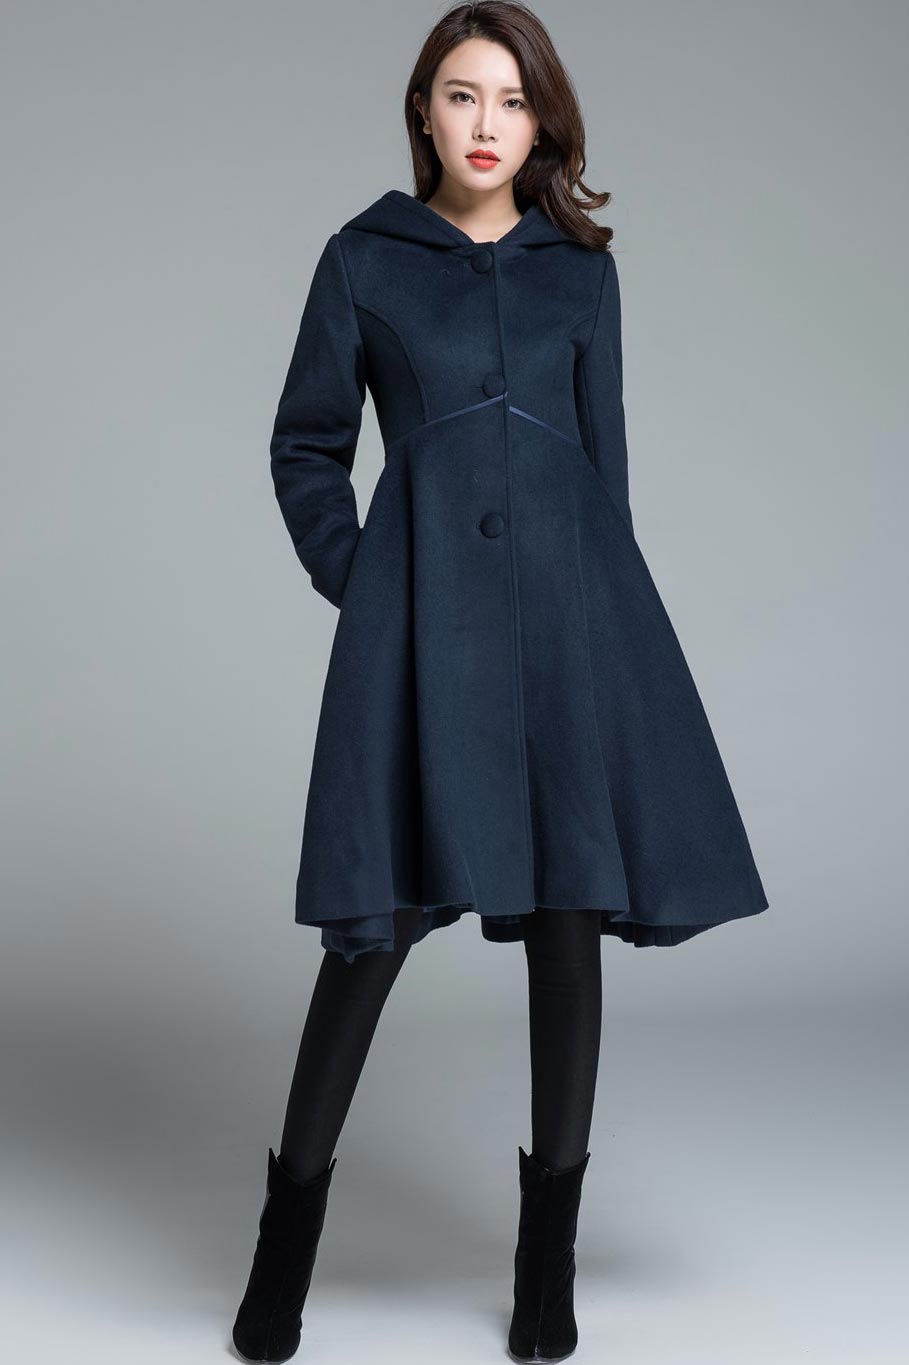 Long Wool Coat, Women's Winter Coat, Hooded Coat, Maxi Coat, Navy